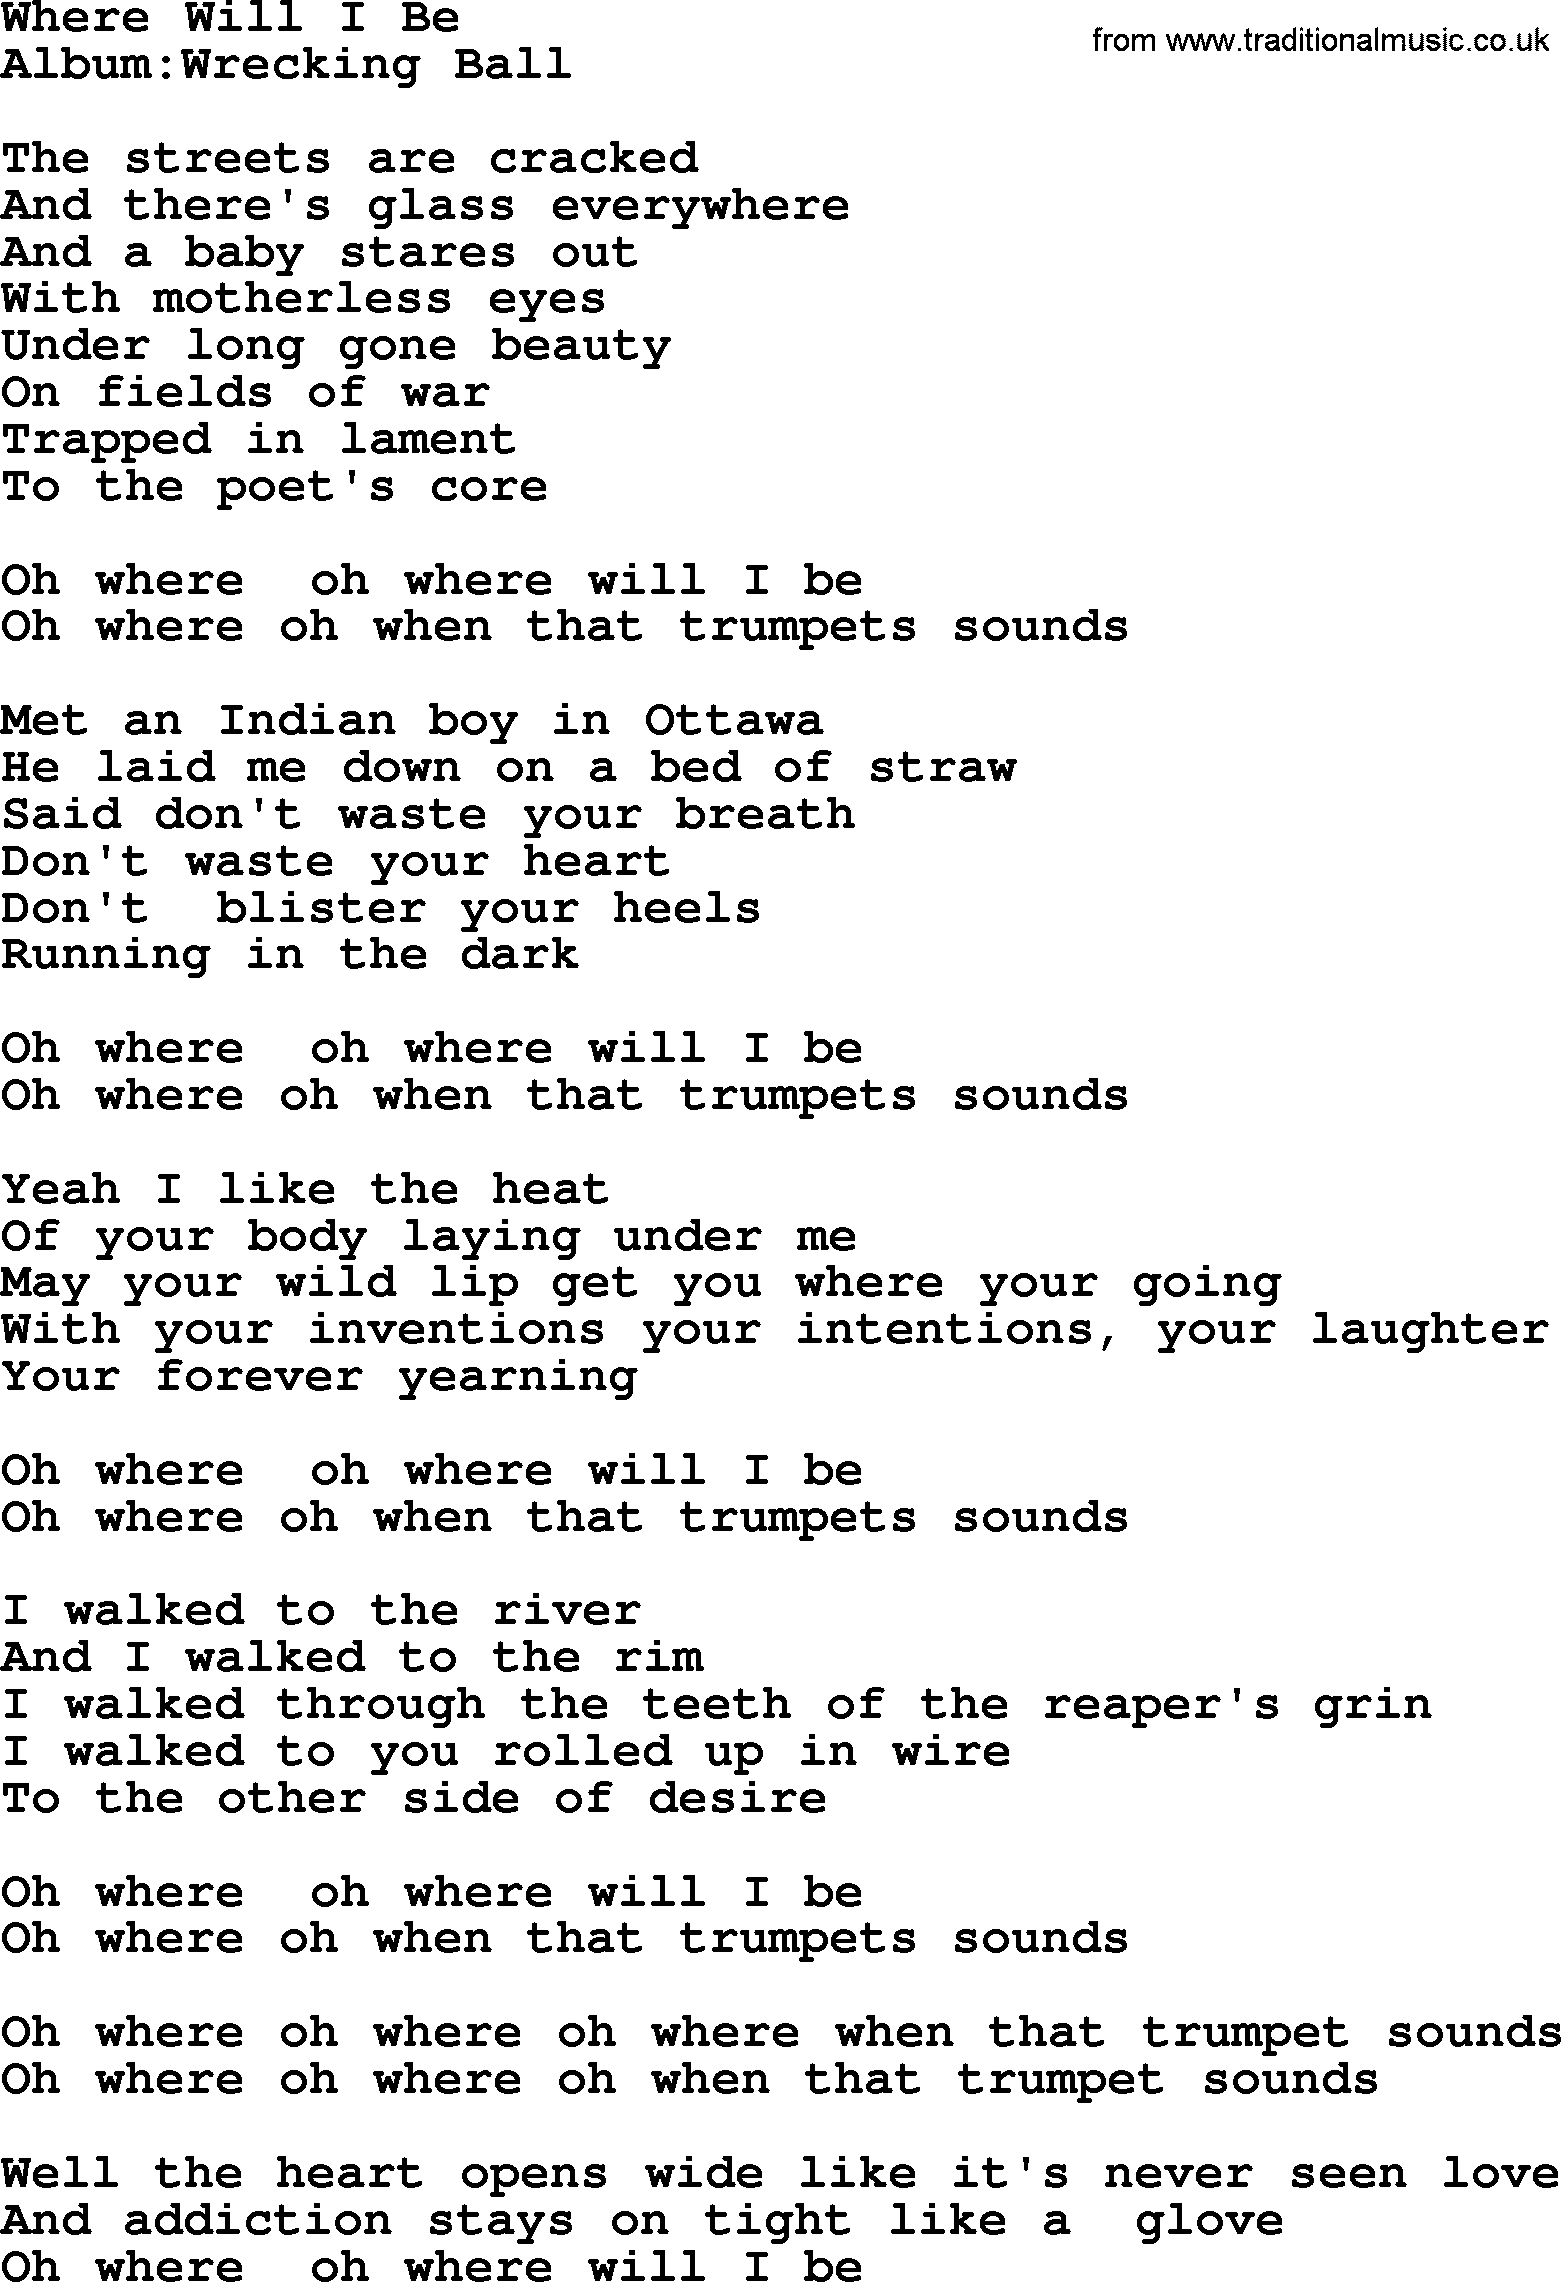 Emmylou Harris song: Where Will I Be lyrics